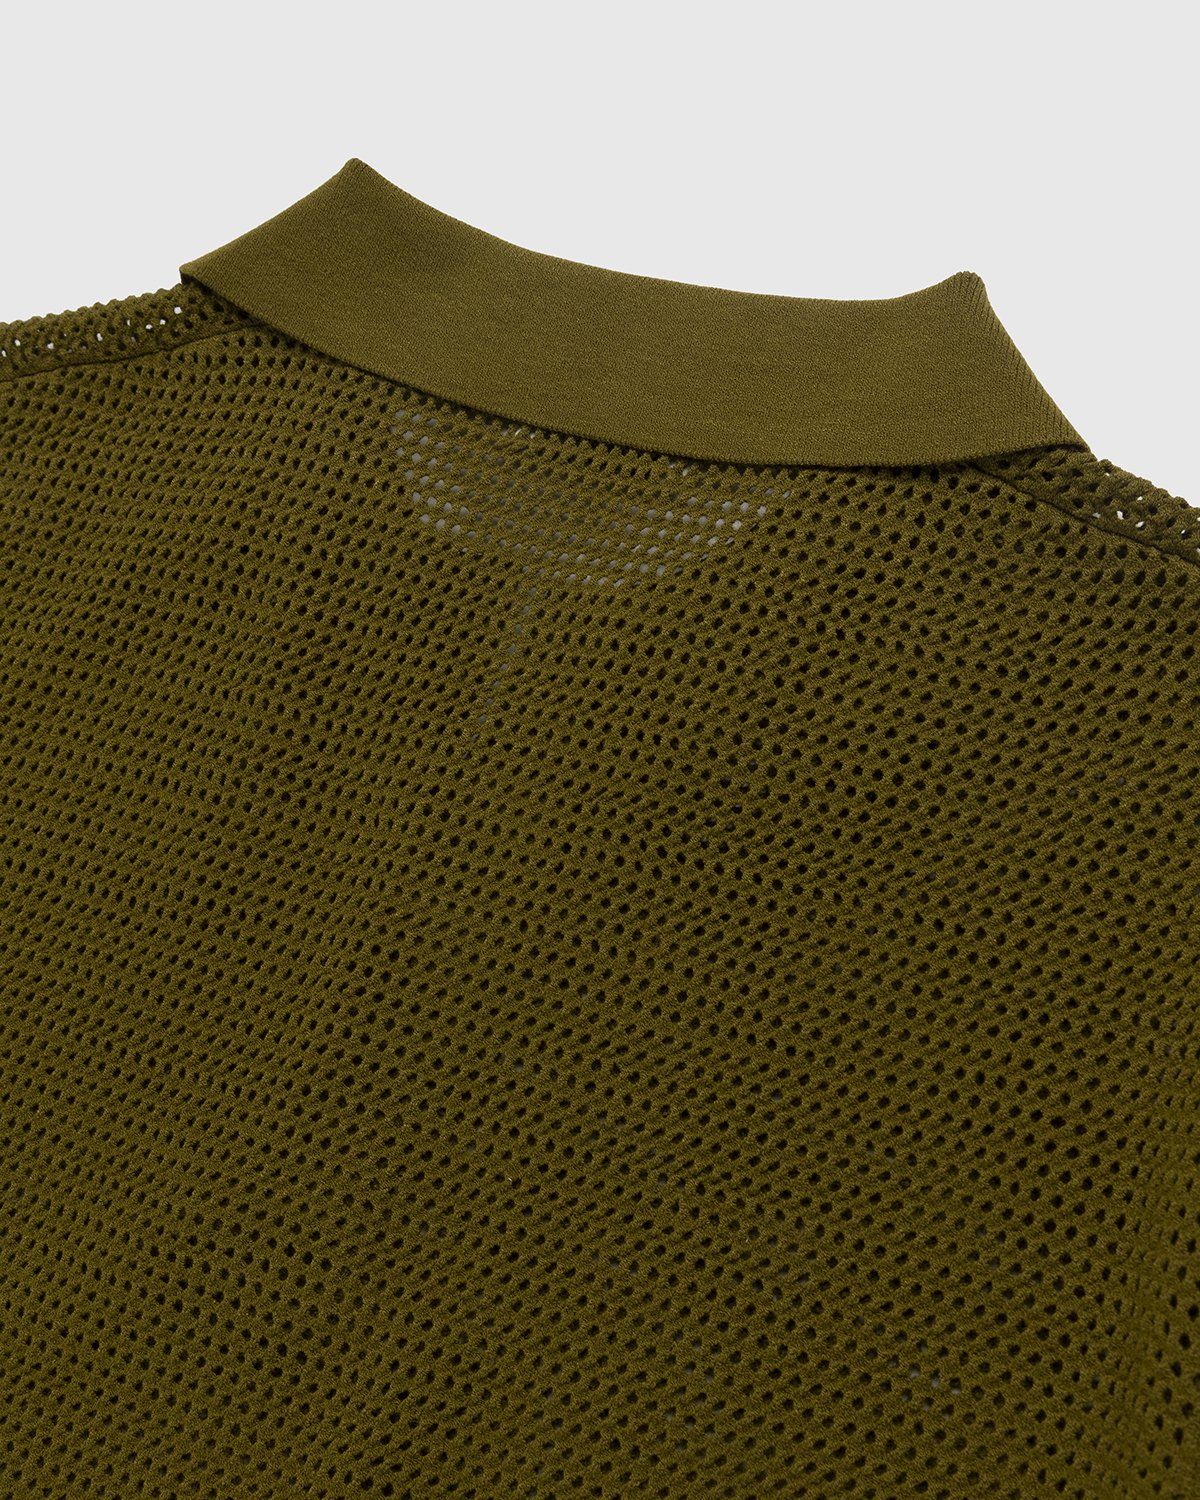 Dries van Noten – Jael Polo Shirt Olive - Shirts - Green - Image 3